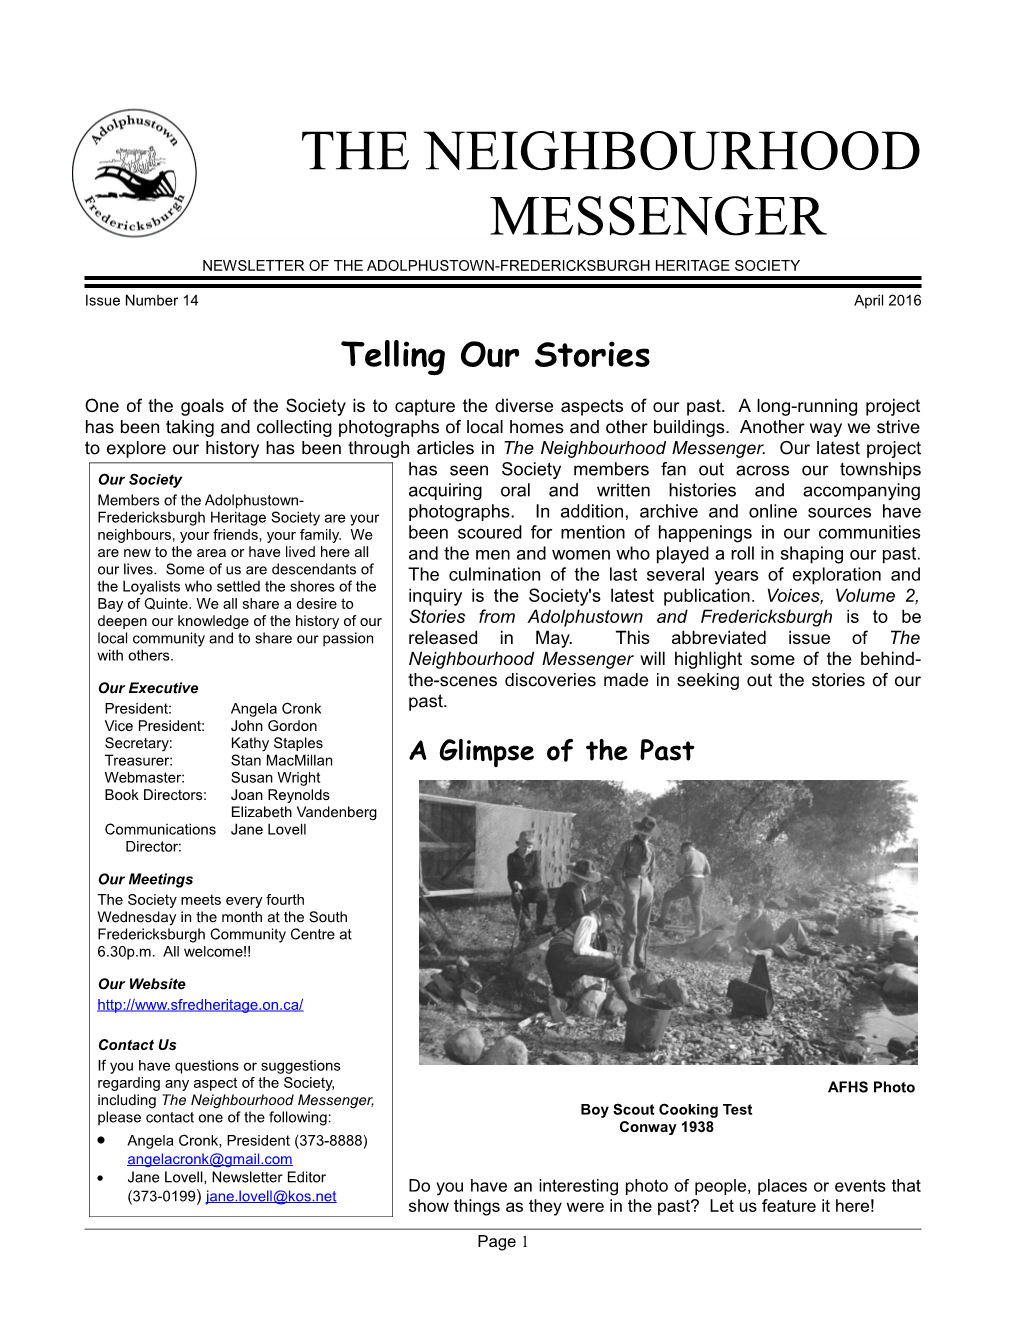 The Neighbourhood Messenger Newsletter of the Adolphustown-Fredericksburgh Heritage Society